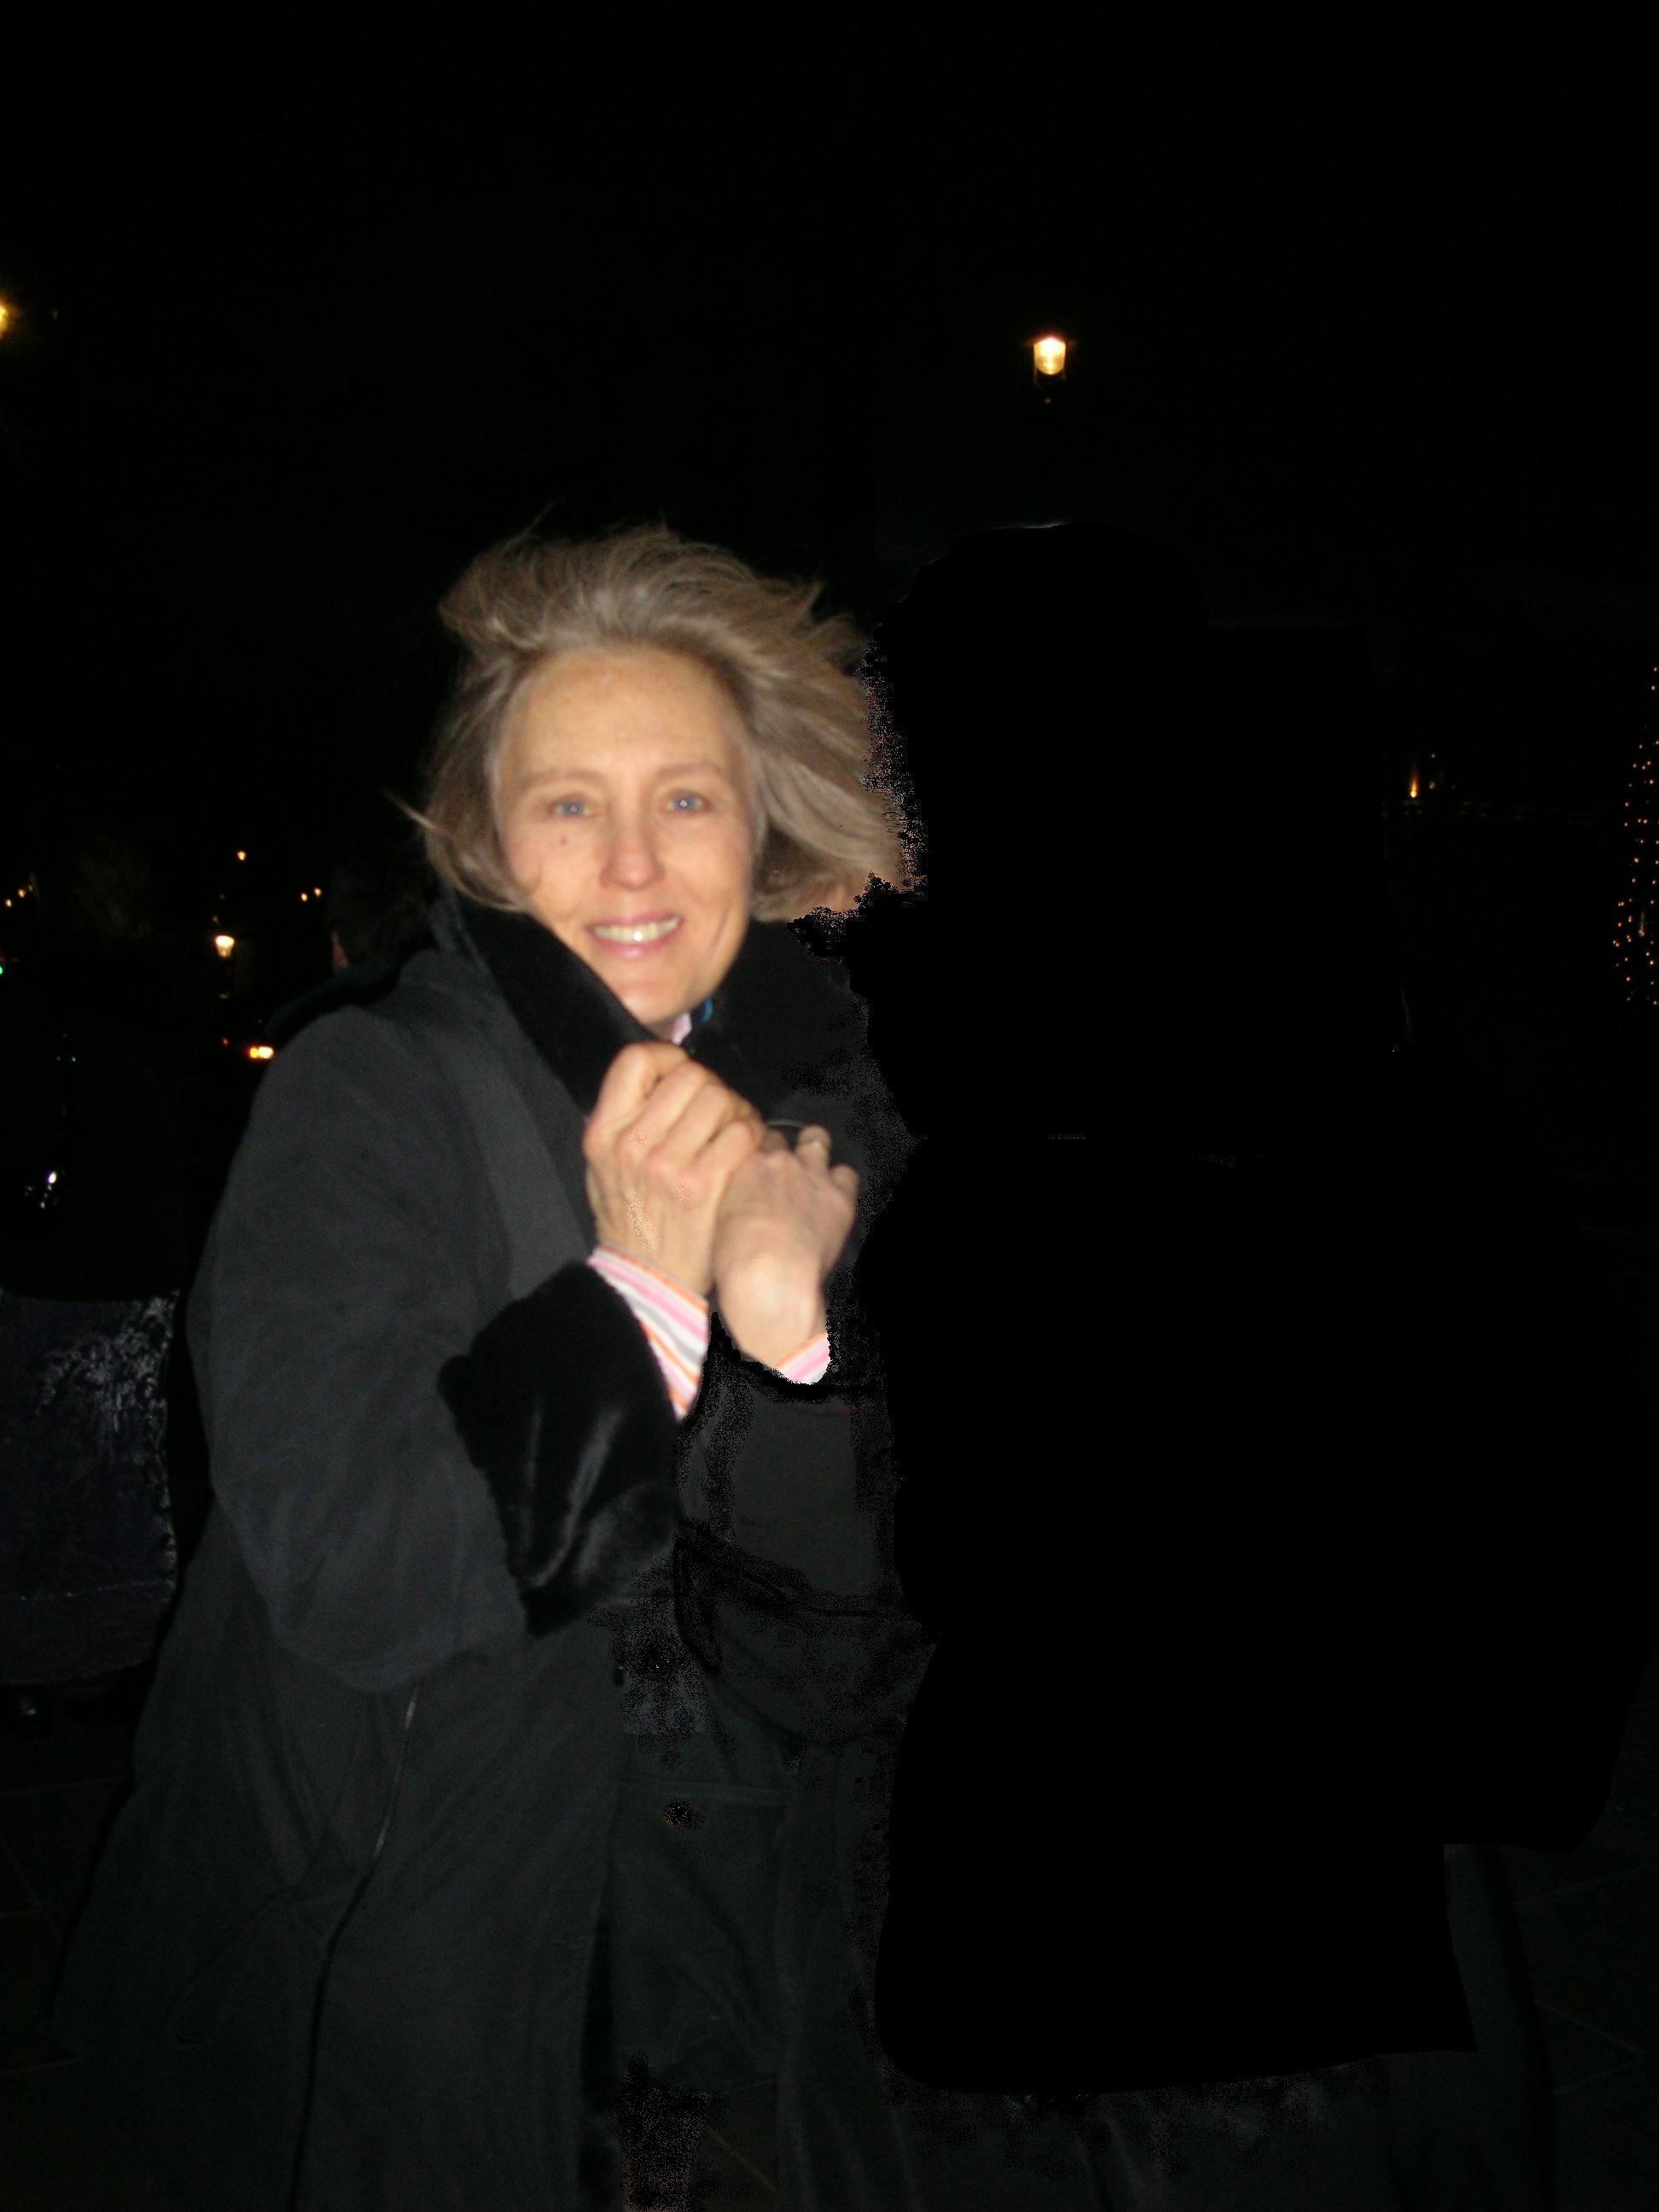 Mary Eileen O'Donnell - Trafalgar Square, London - December 29, 2007